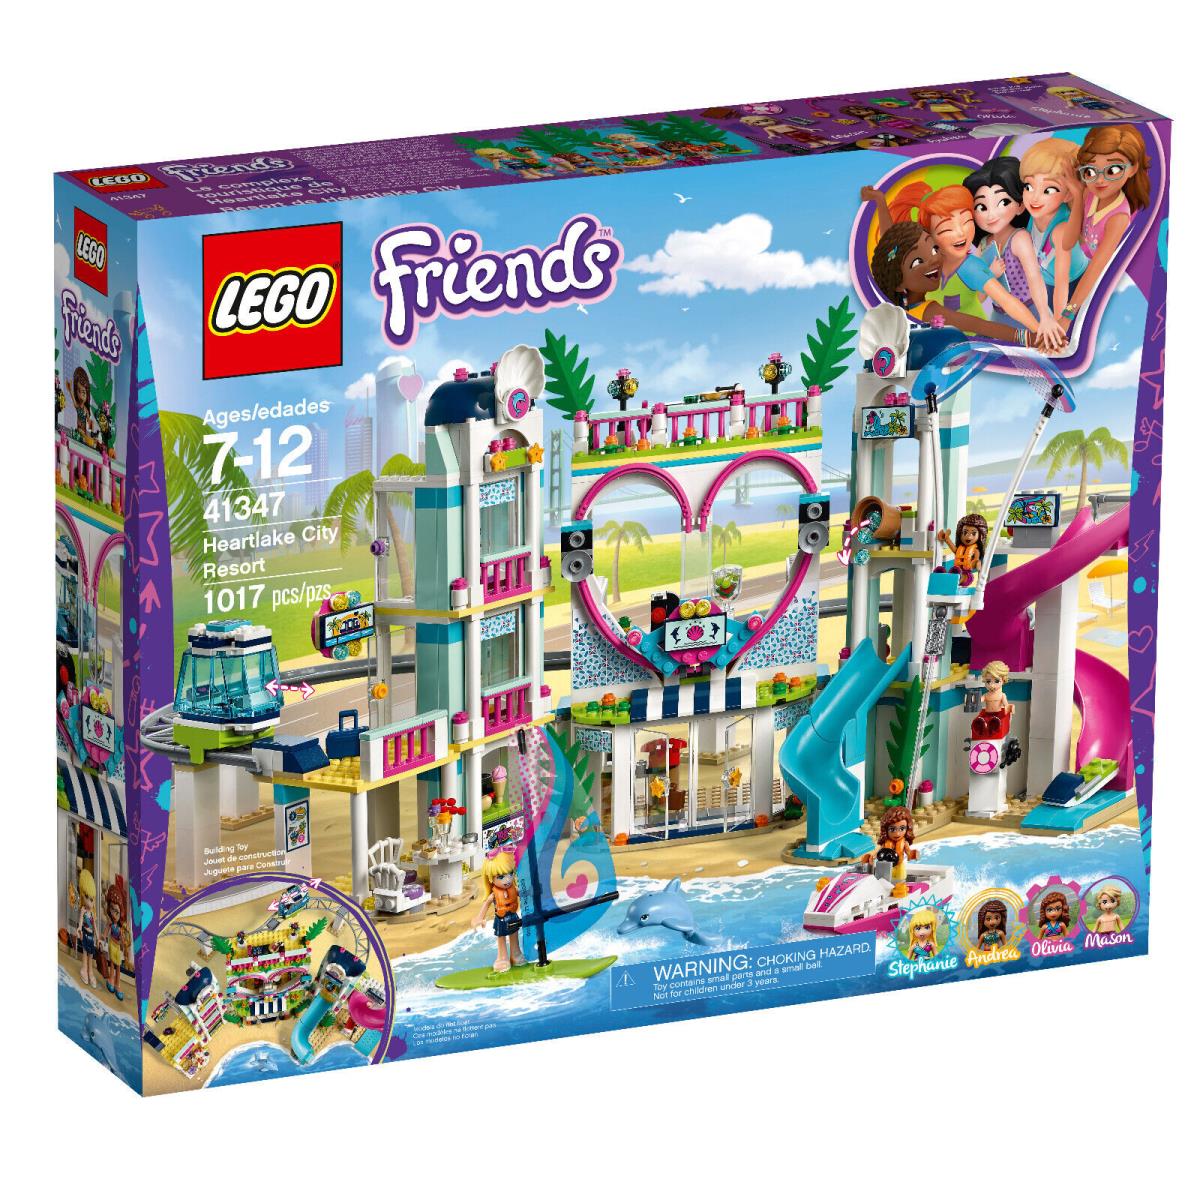 Lego 41347 Friends Heartlake City Resort - - Retired